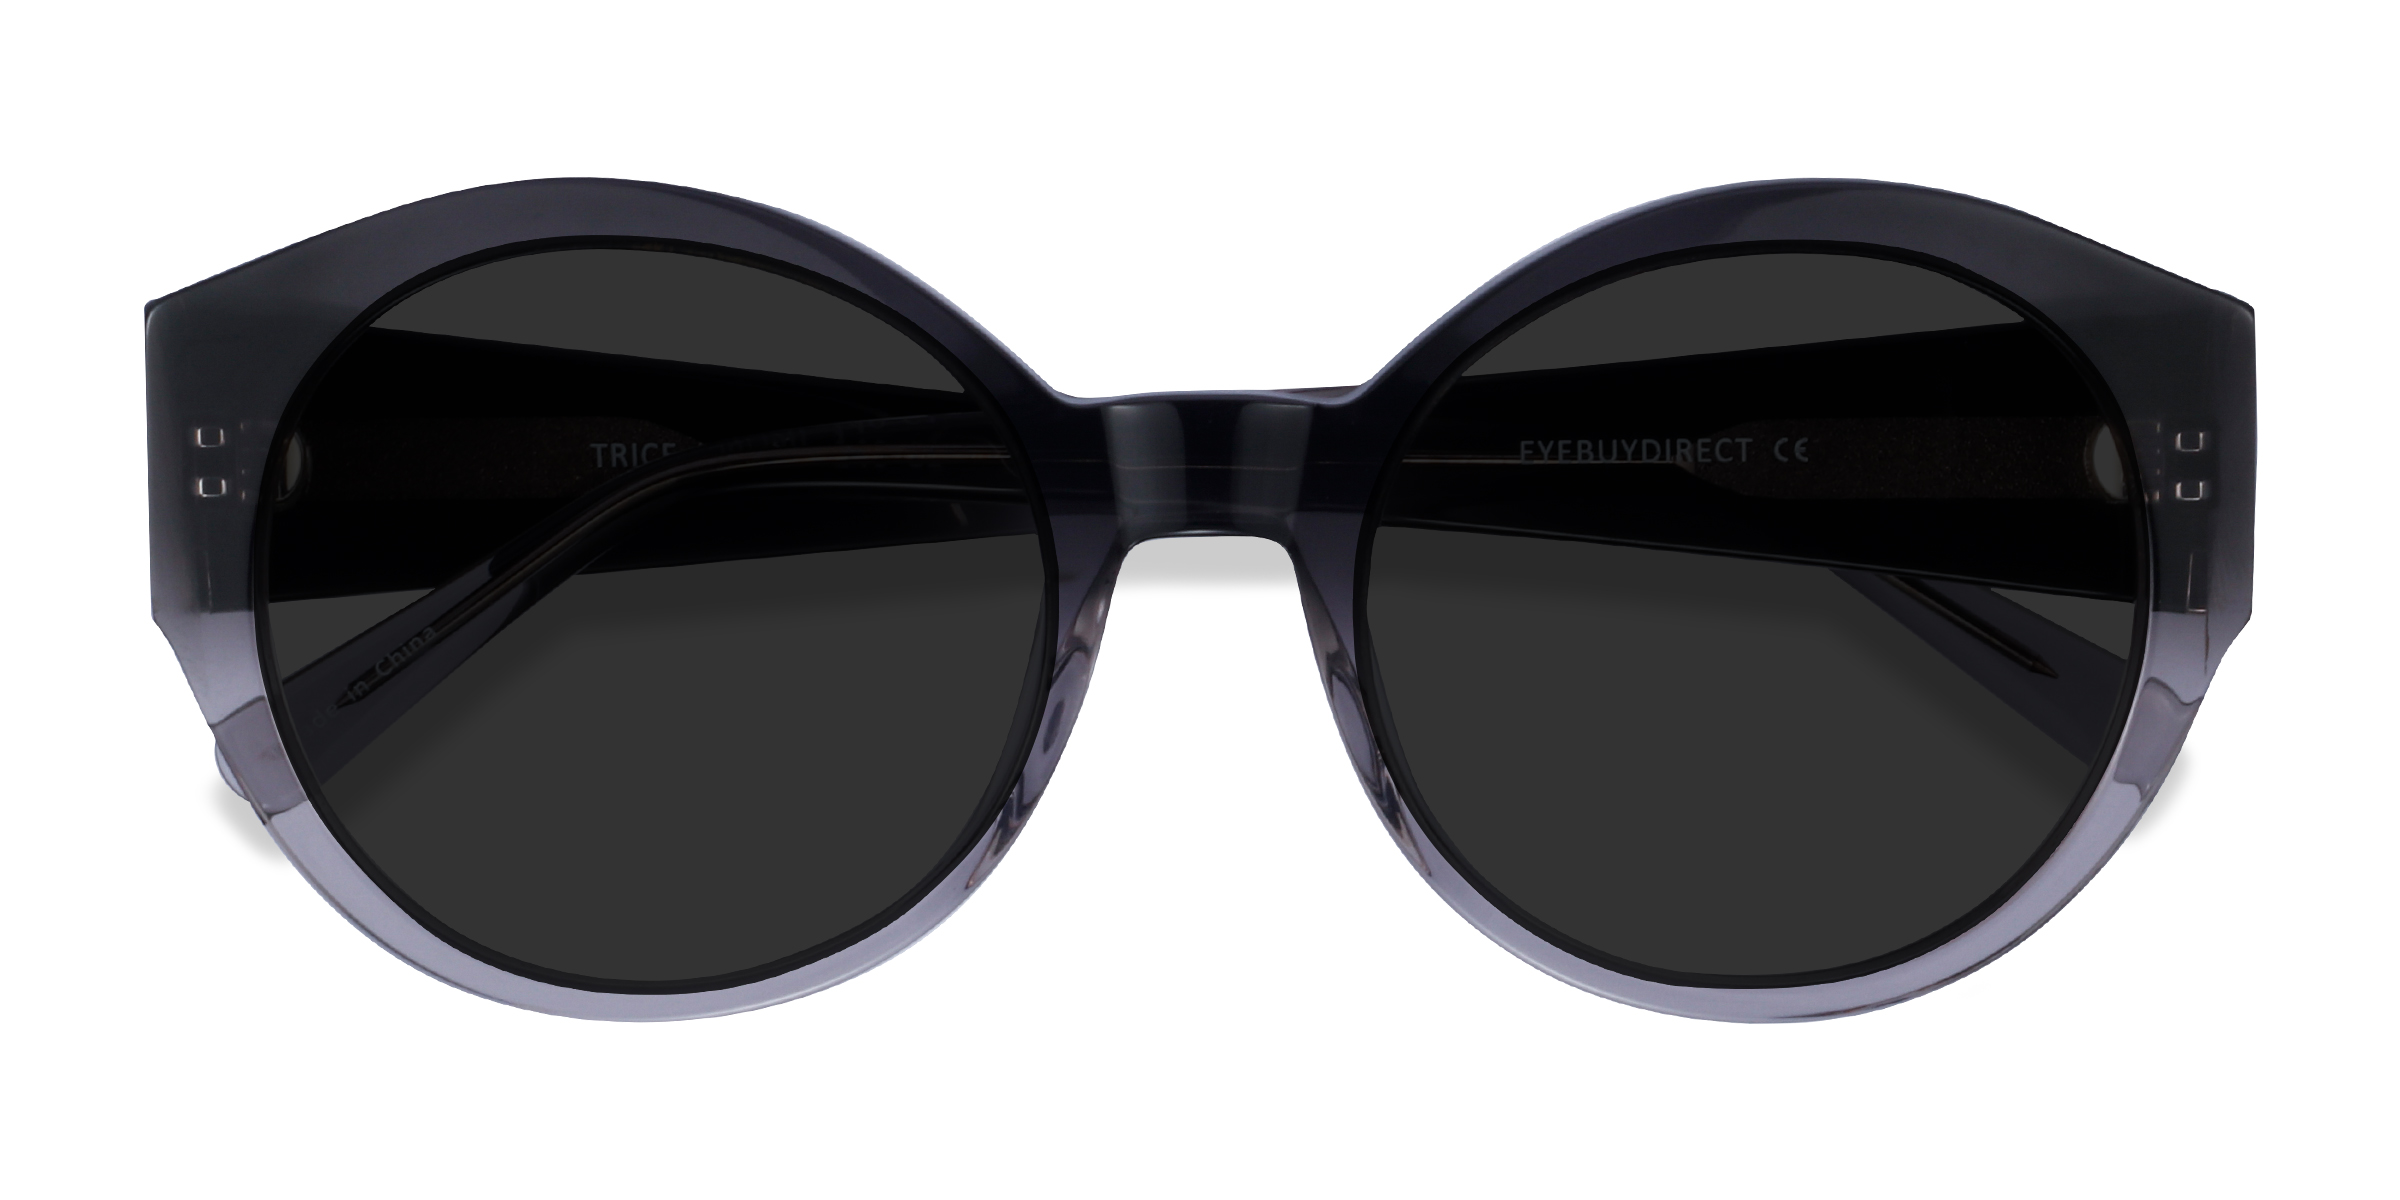 New Arrivals - Eyeglasses & Sunglasses Styles | EyeBuyDirect